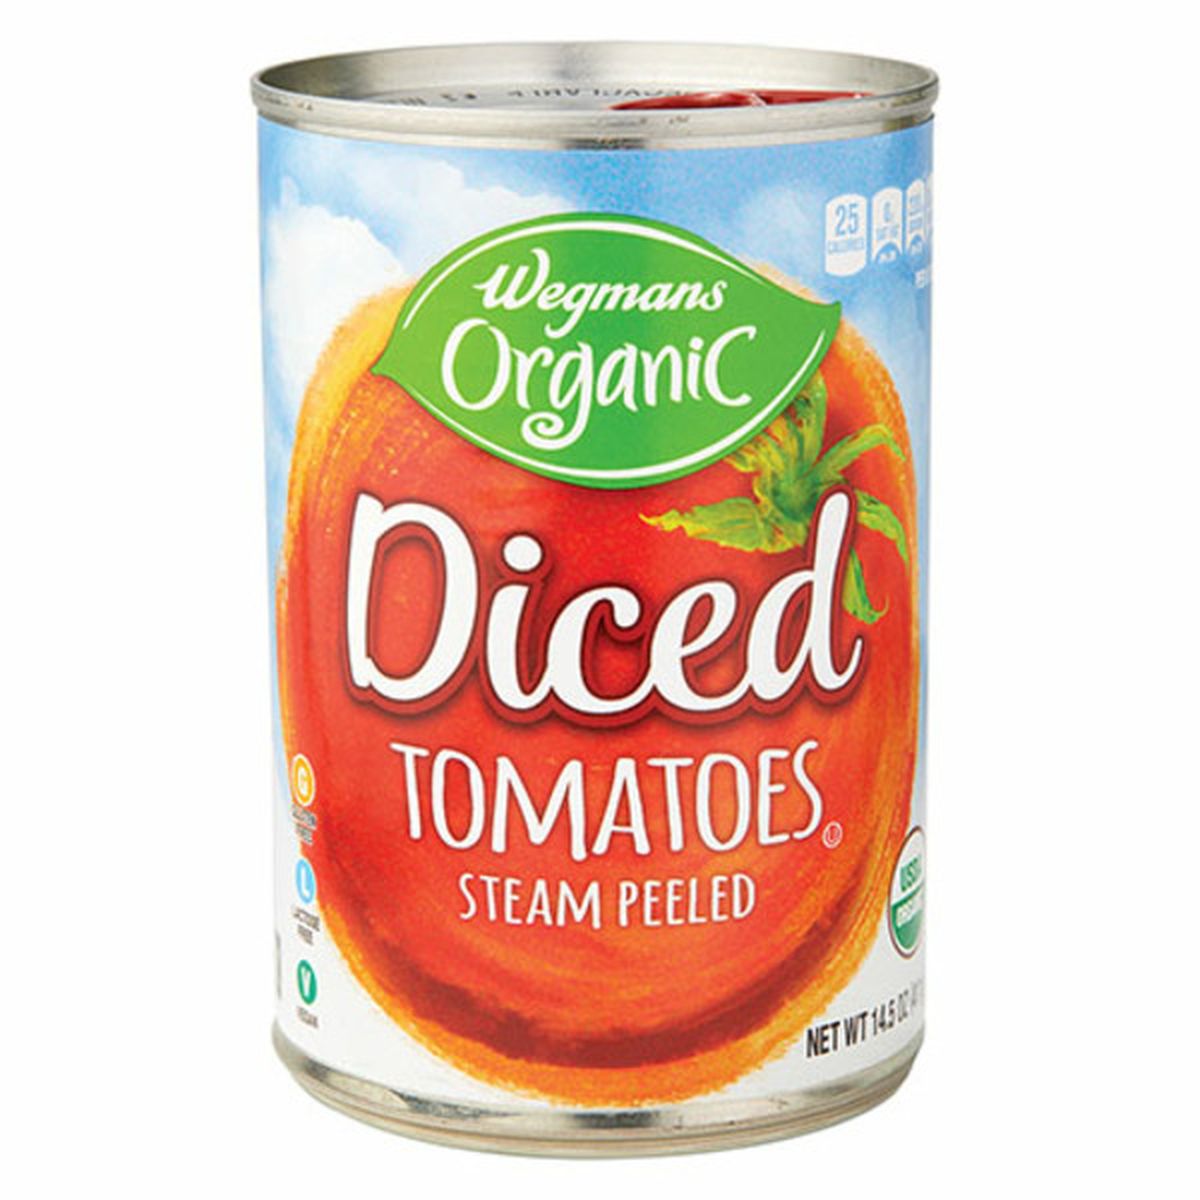 Calories in Wegmans Organic Diced Tomatoes